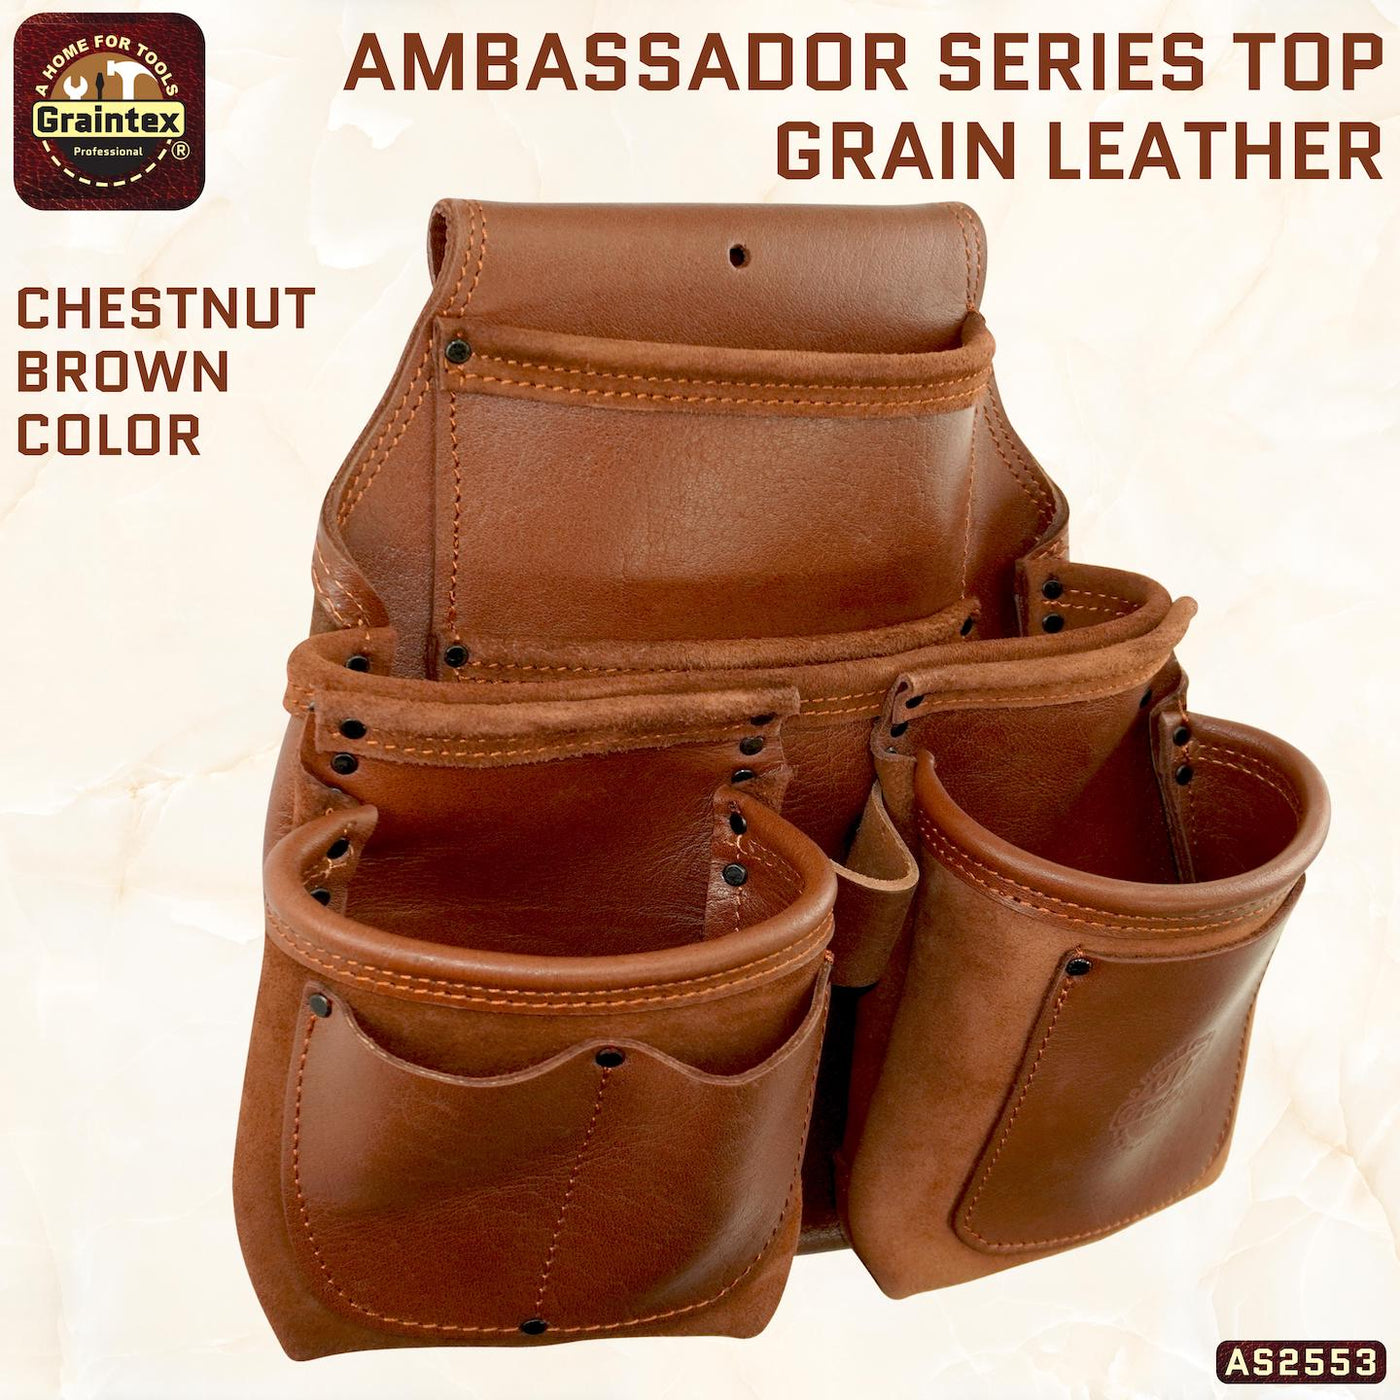 AS2553 :: 8 Pocket Framer's Tool Pouch Ambassador Series Chestnut Brown Color Top Grain Leather